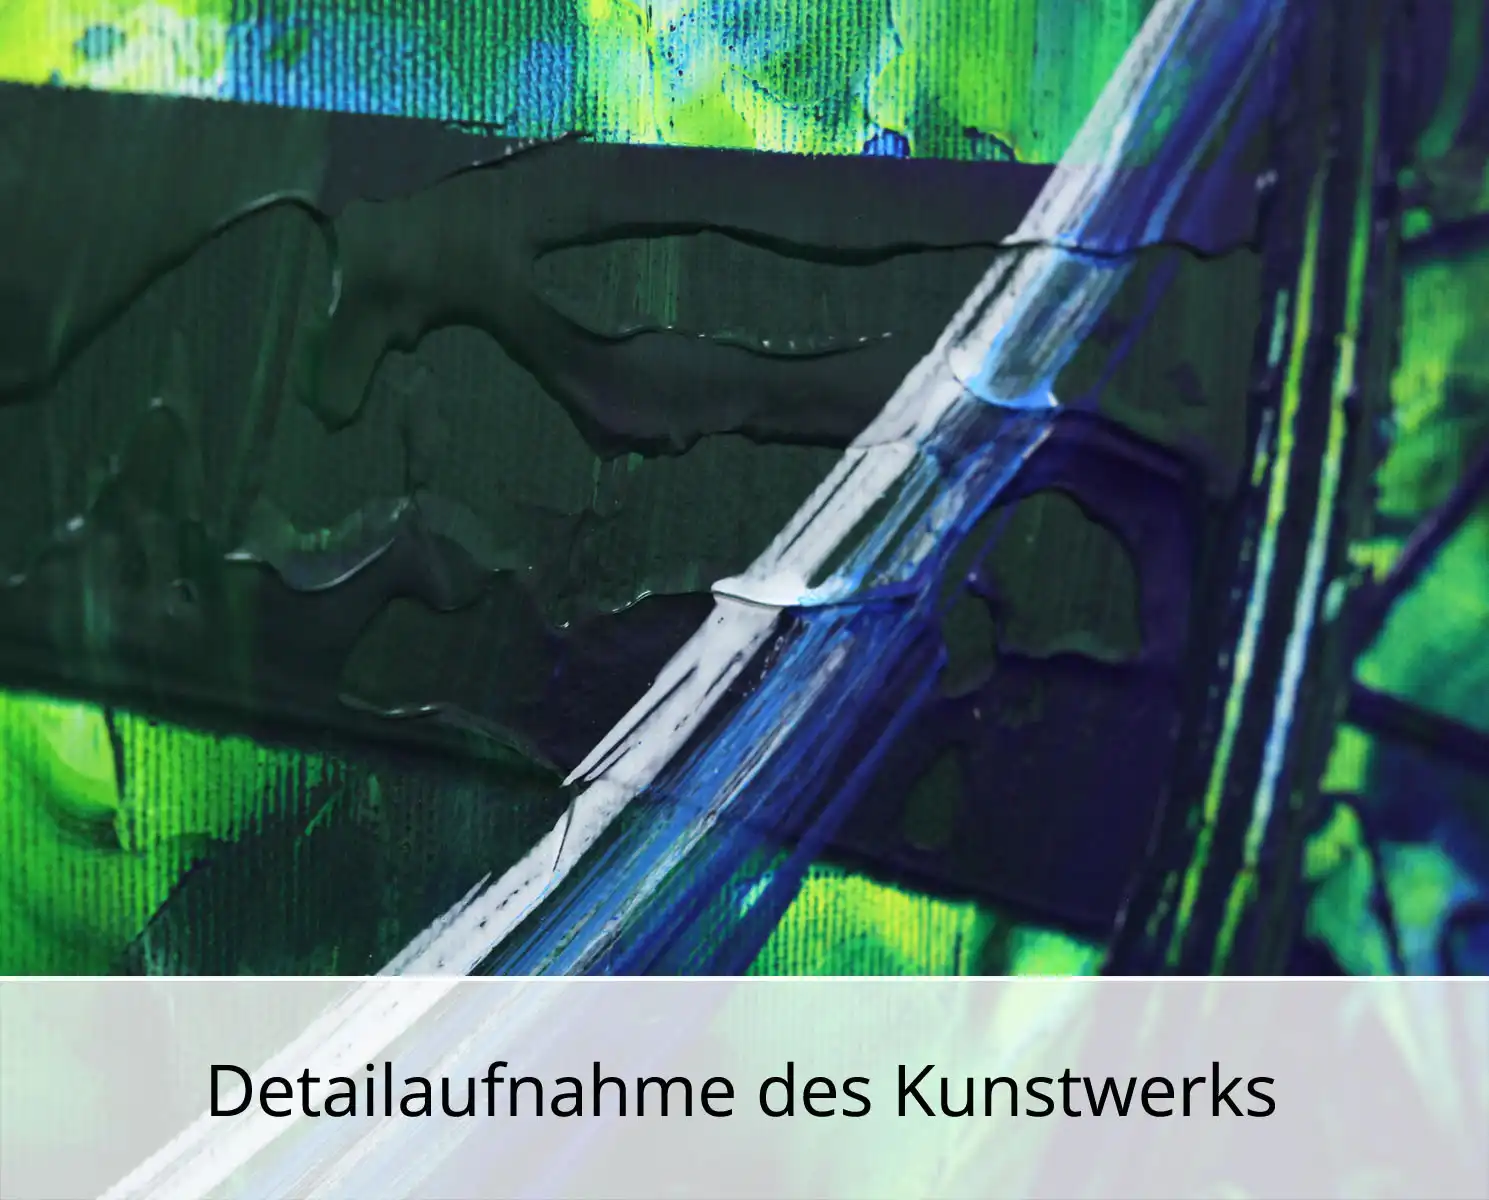 Abstraktes Originalgemälde: "Shining Colours VII", R. König, Unikat